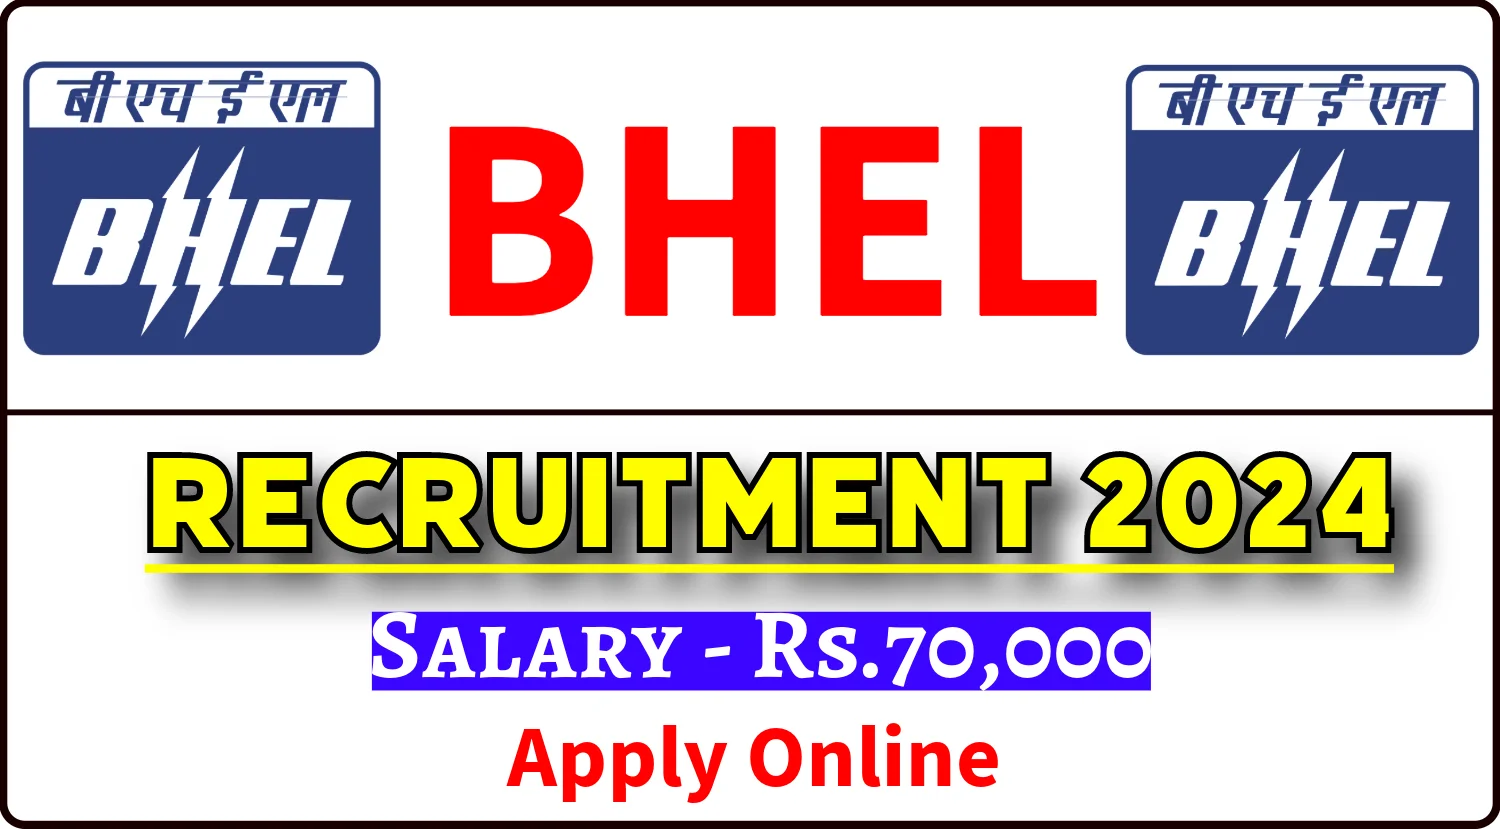 BHEL Recruitment 2024 for Engineering Posts